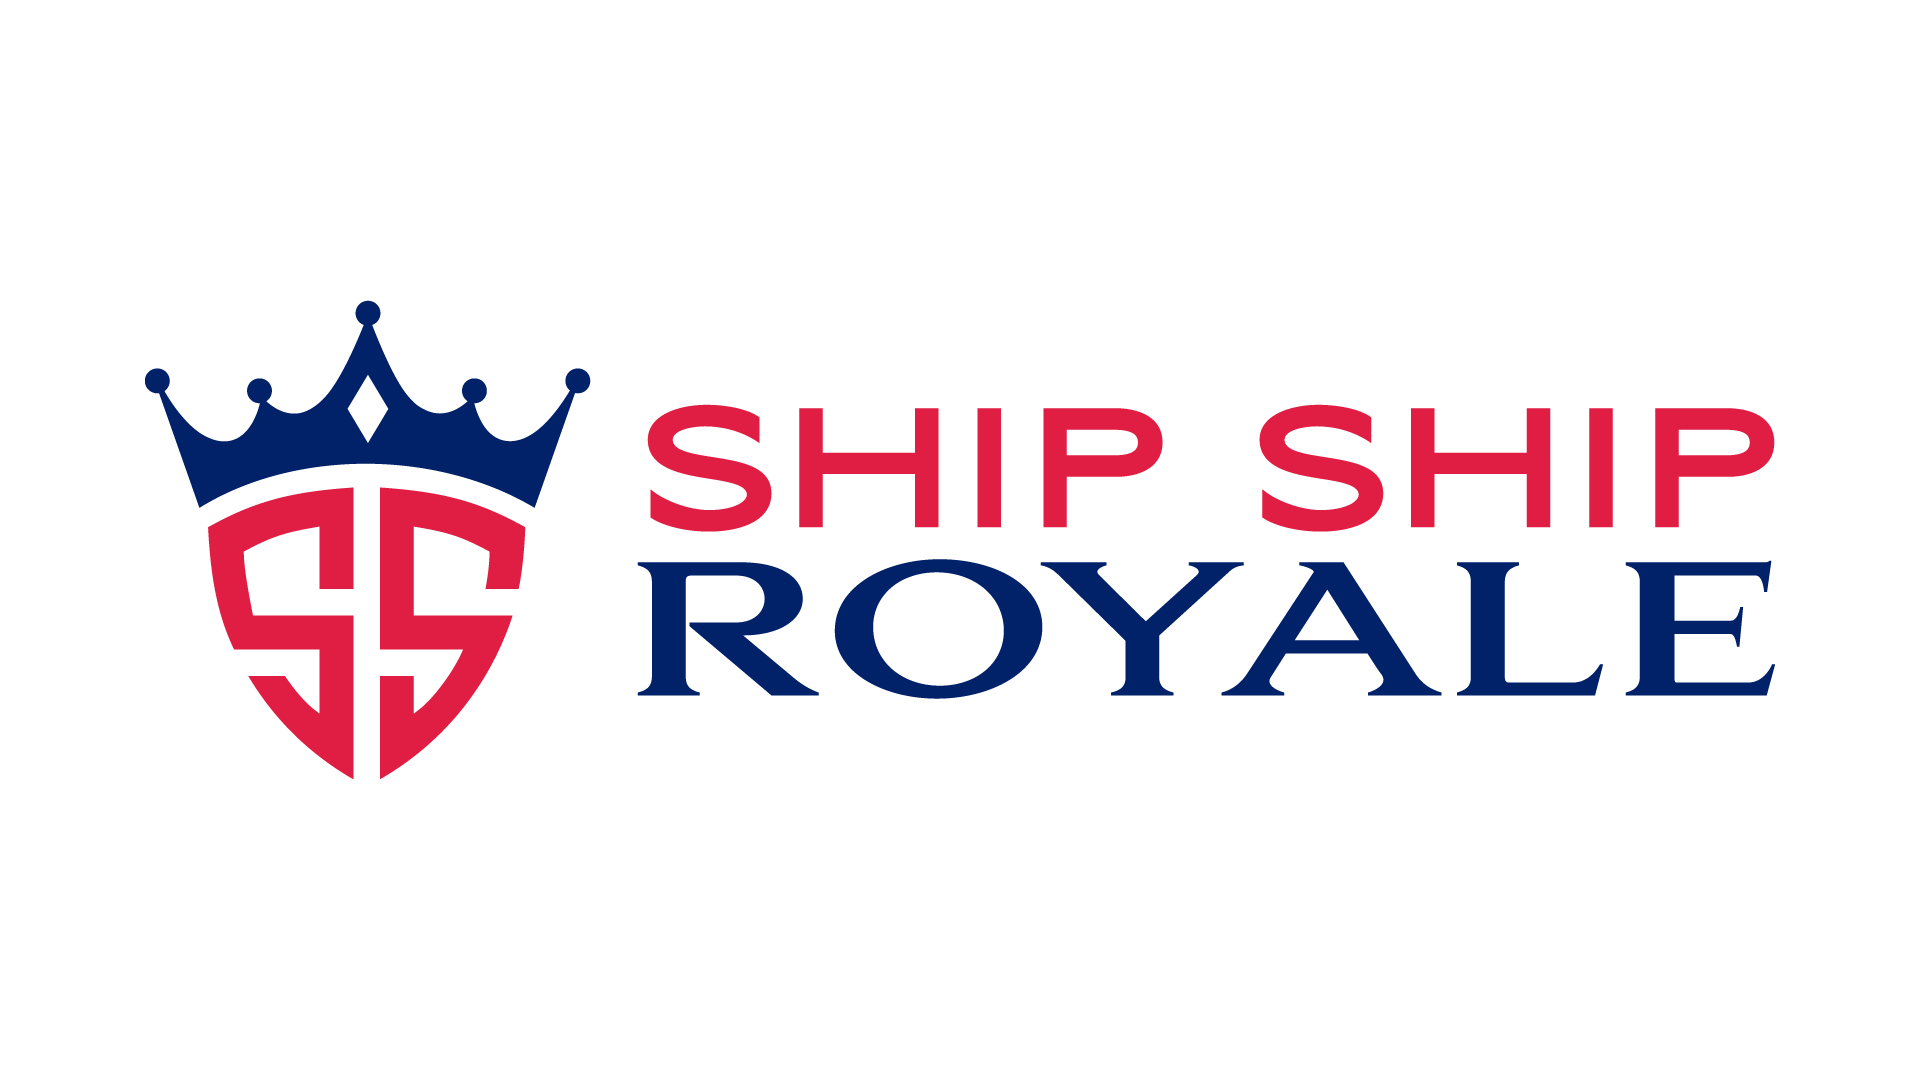 ShipShip Royale